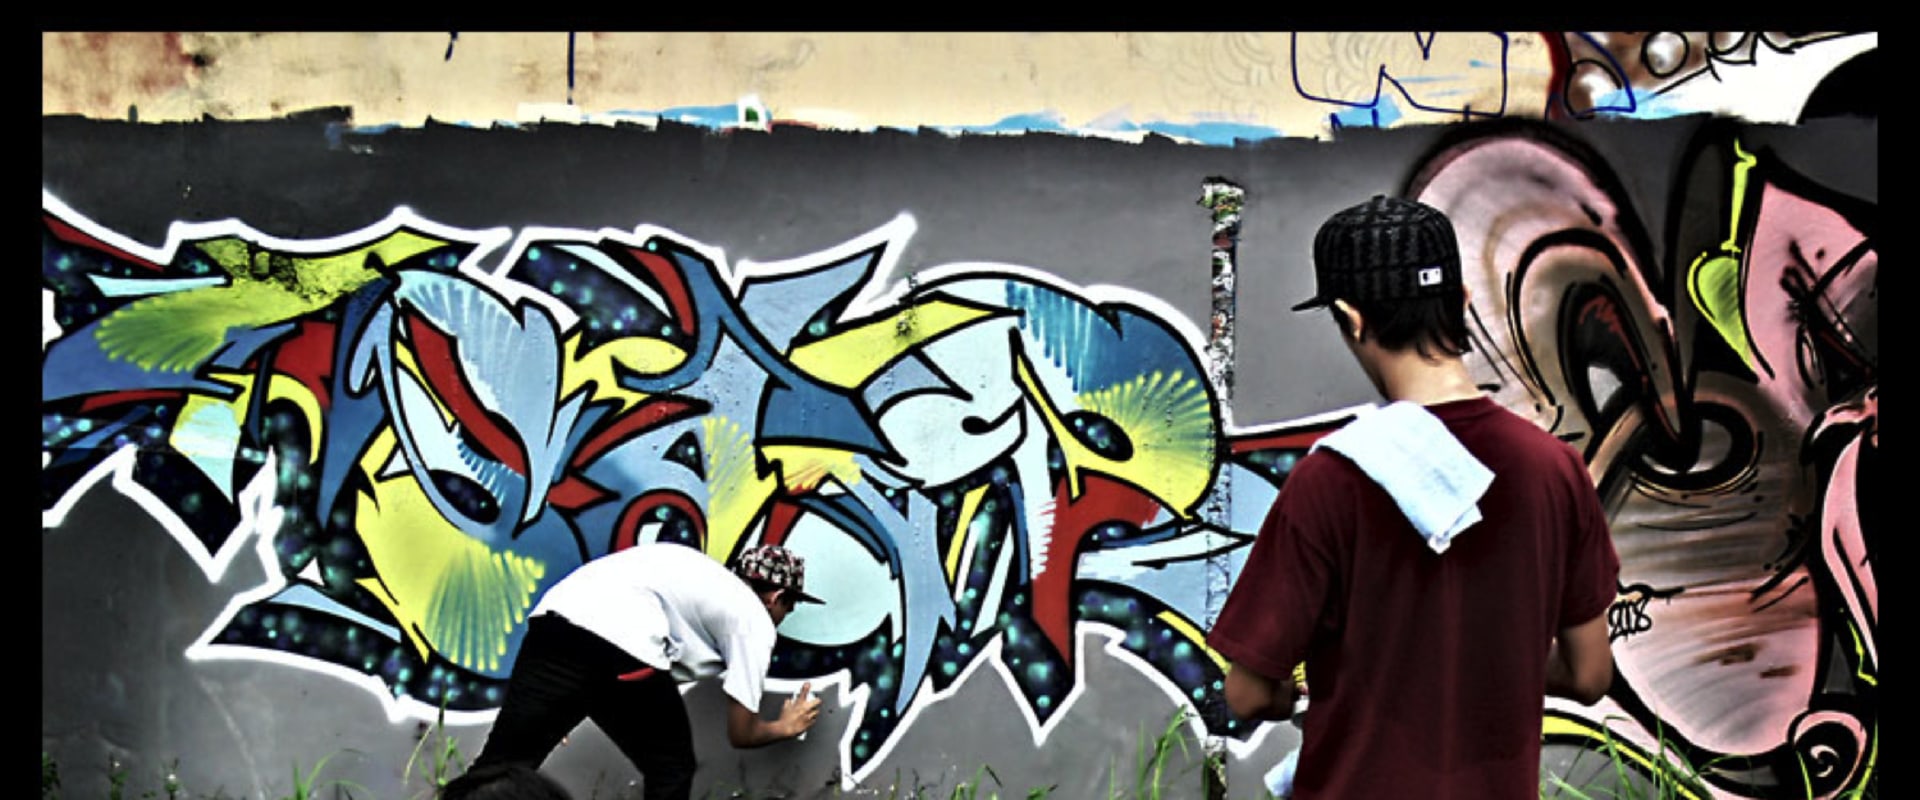 What are similar characteristics of graffiti and street art?